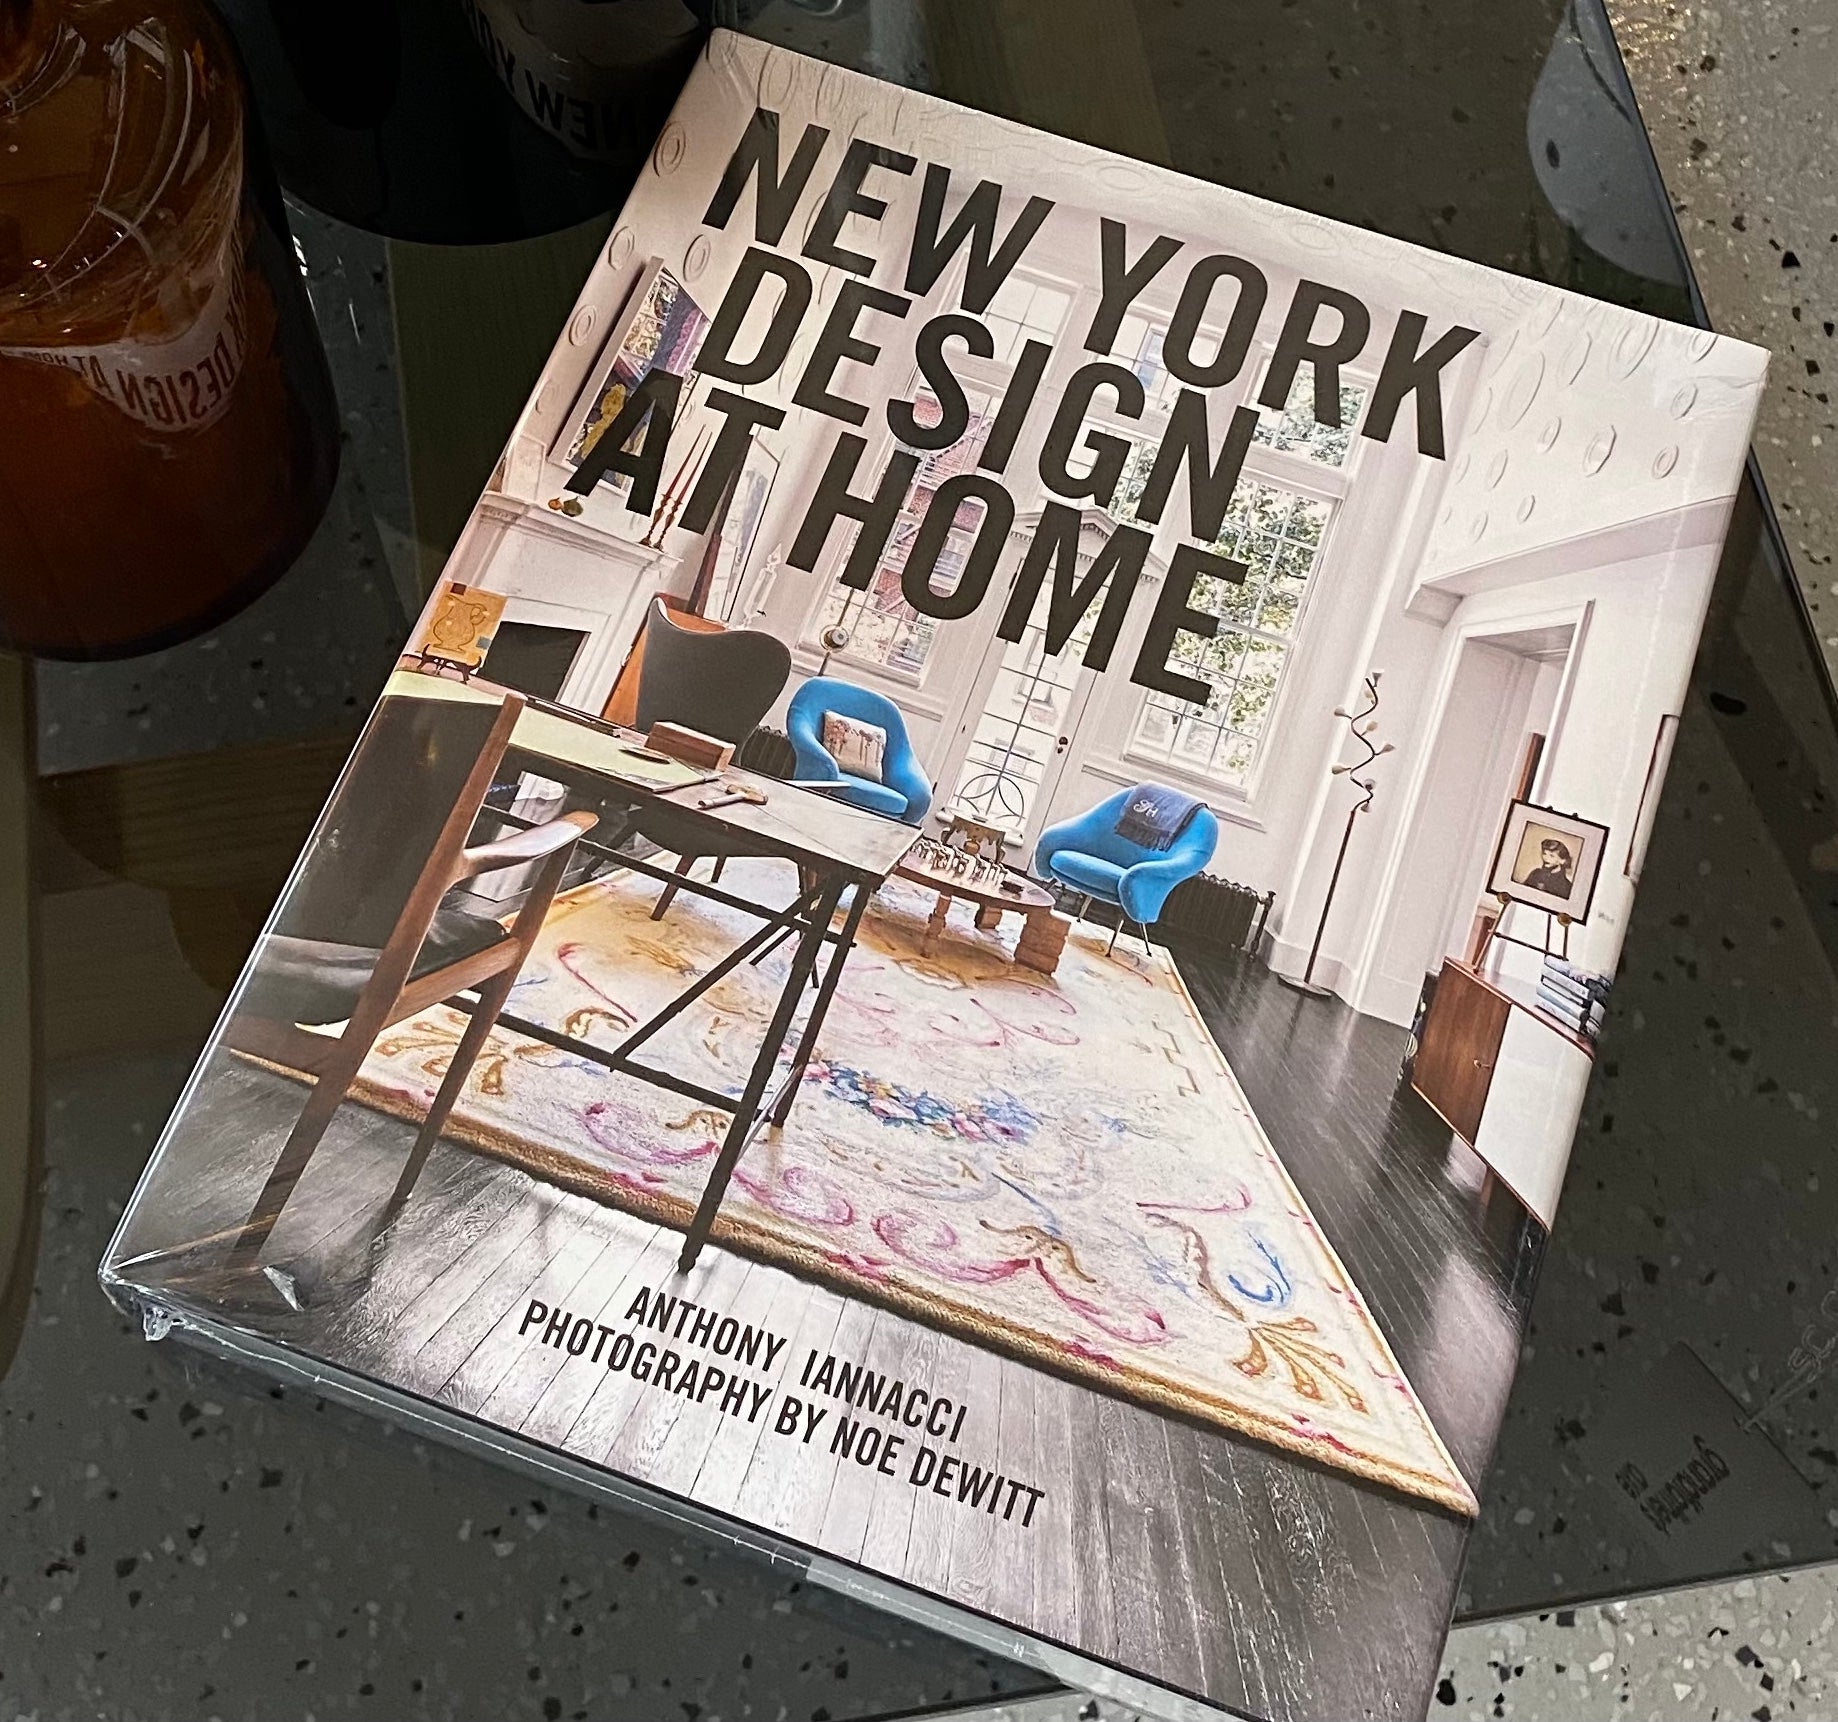 New York Design at Home